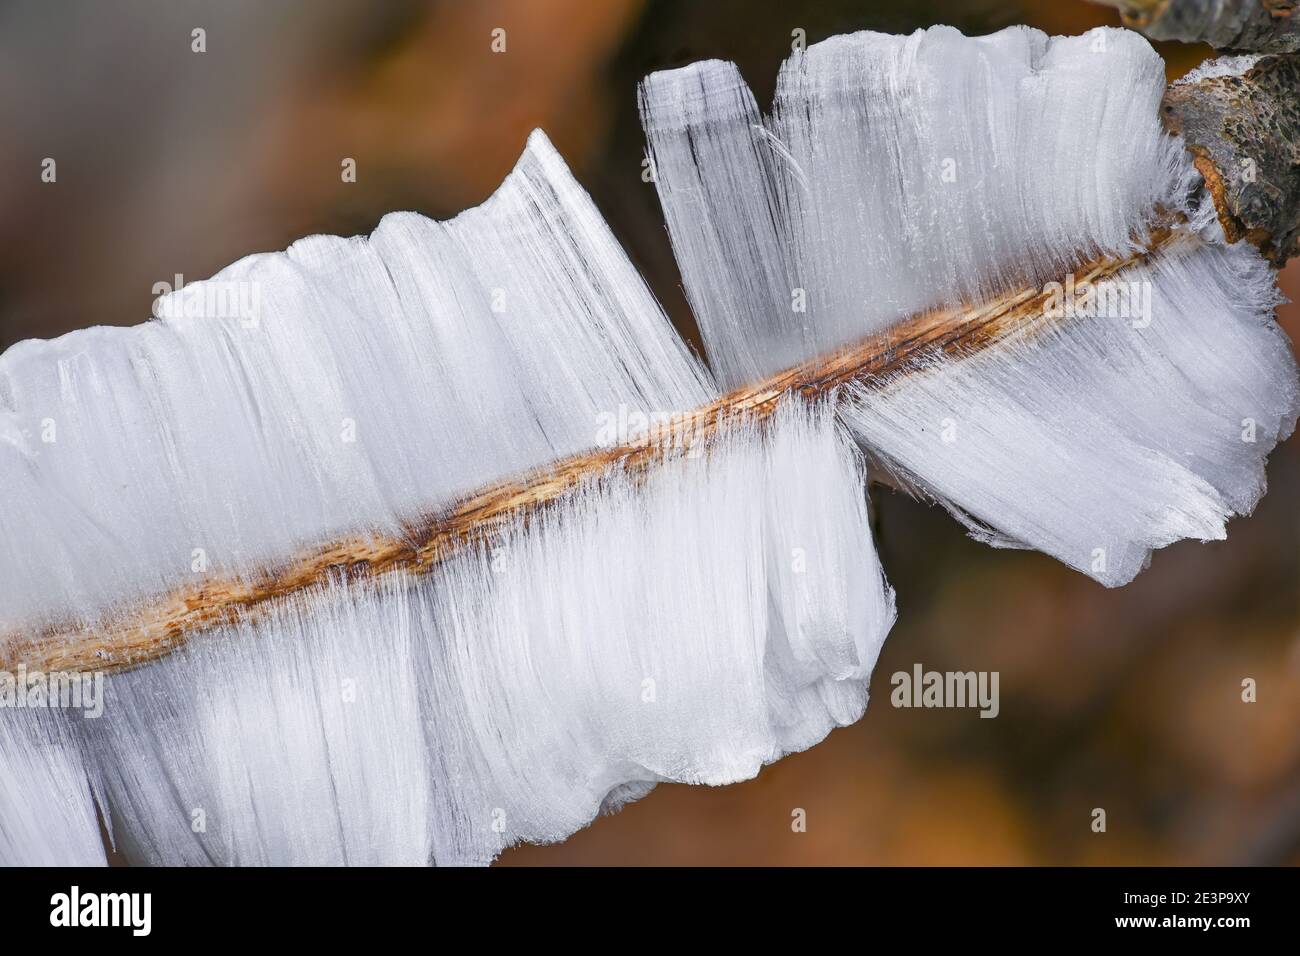 Ice hair on wood Stock Photo